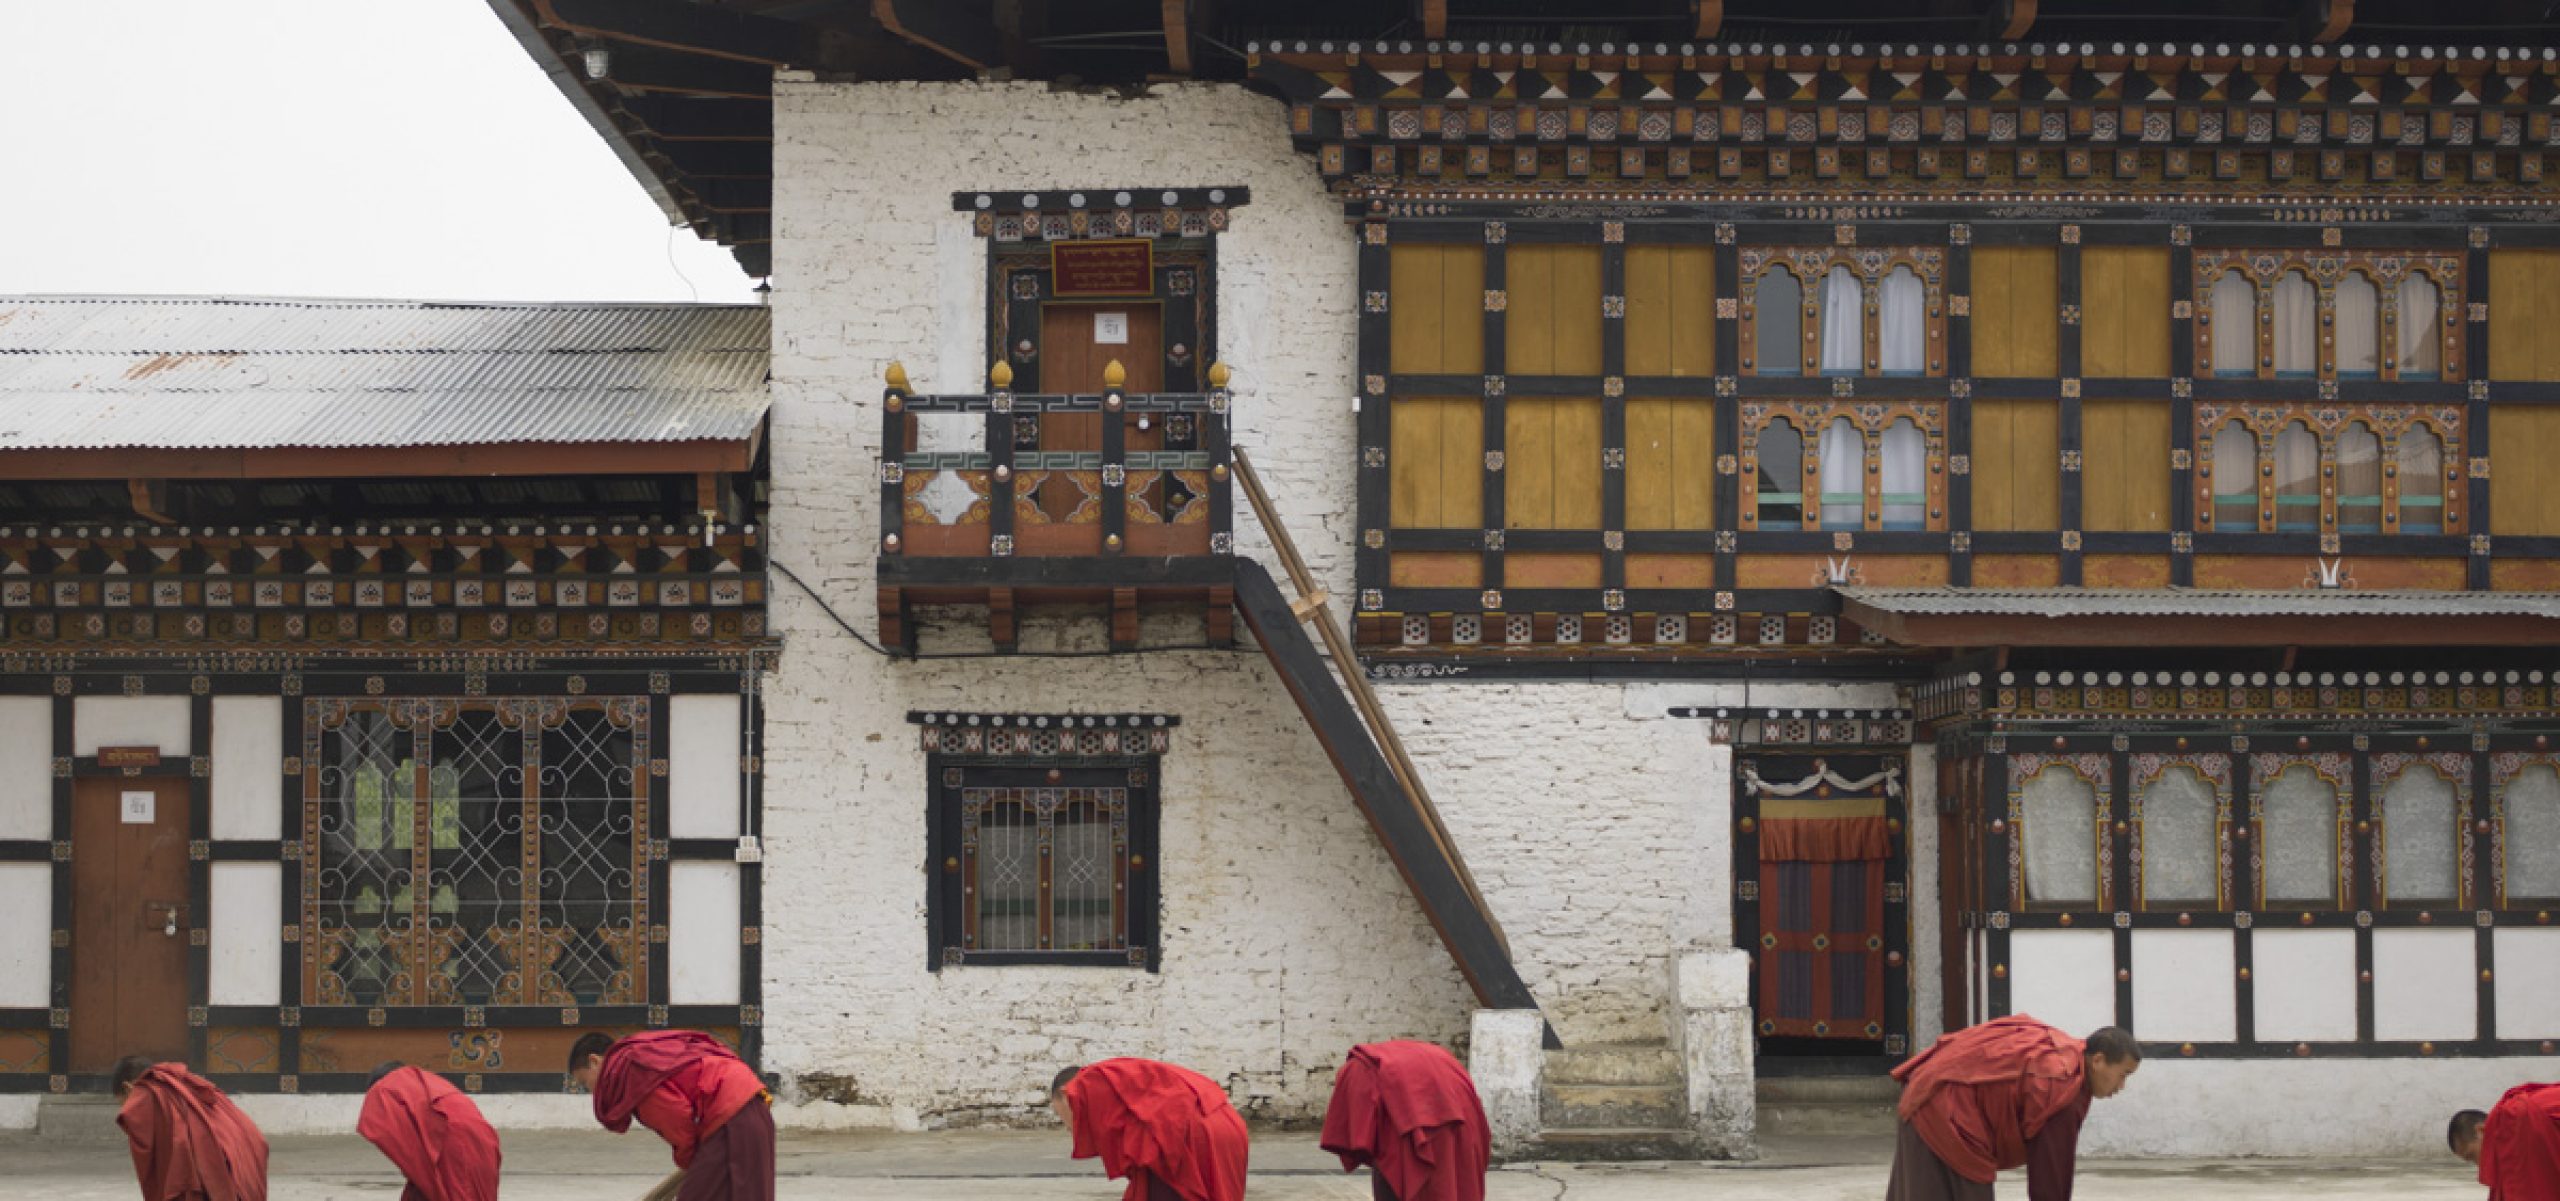 Bhutan - Drametse